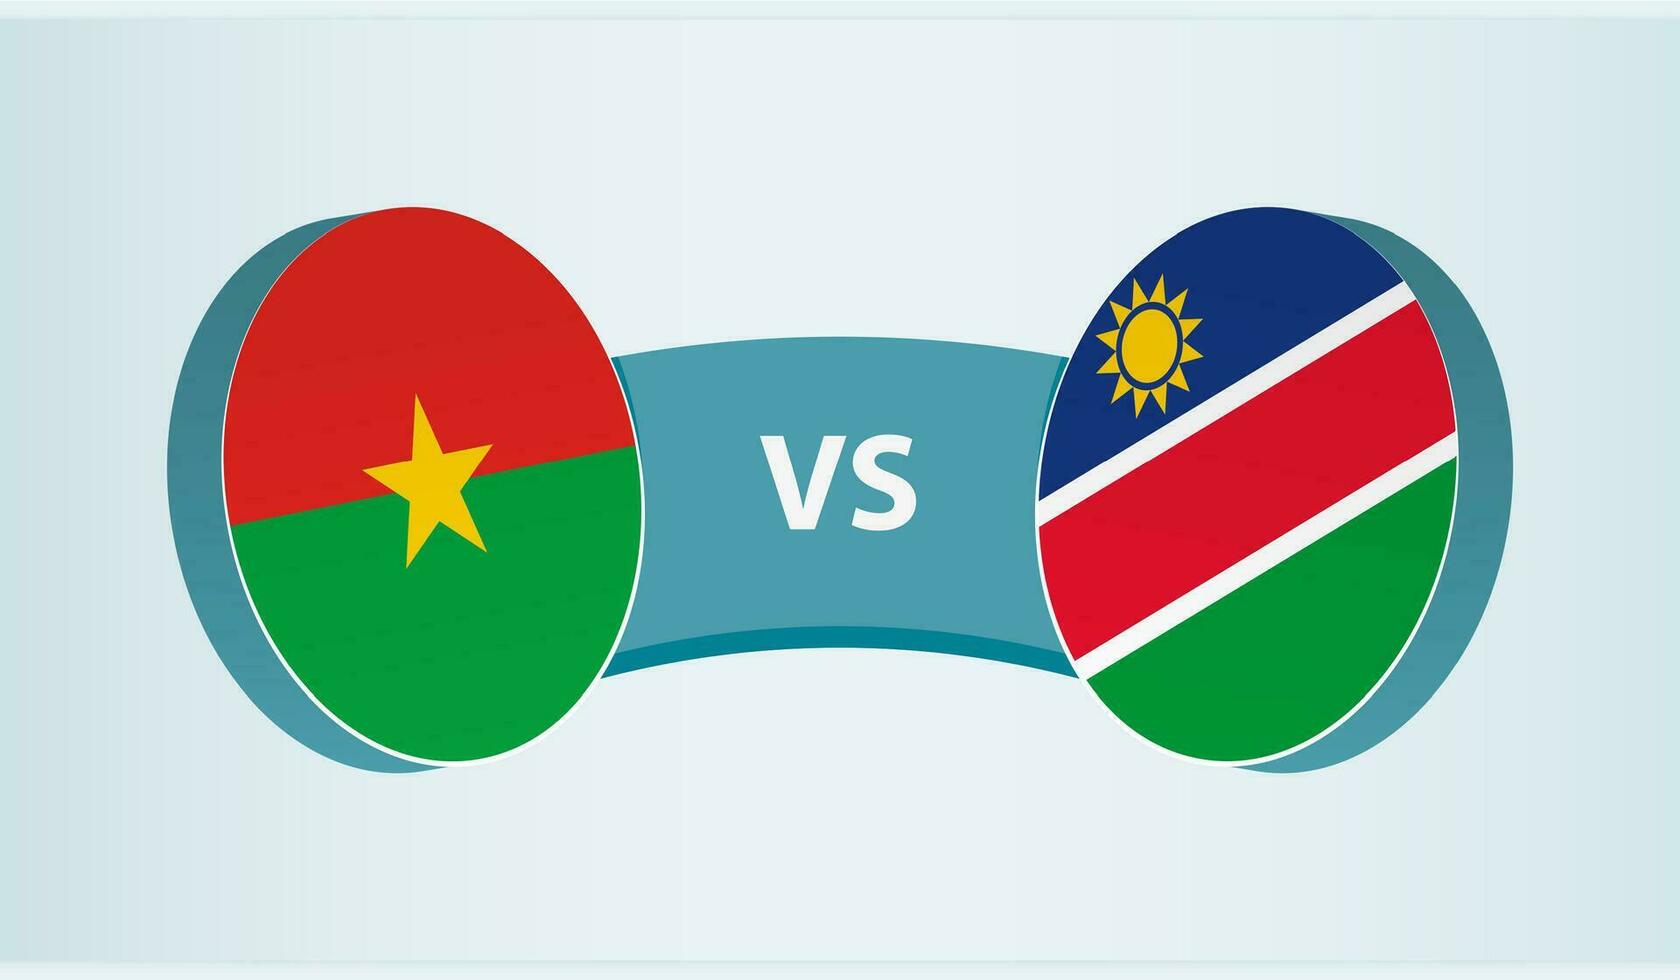 burkina faso versus Namibia, equipo Deportes competencia concepto. vector